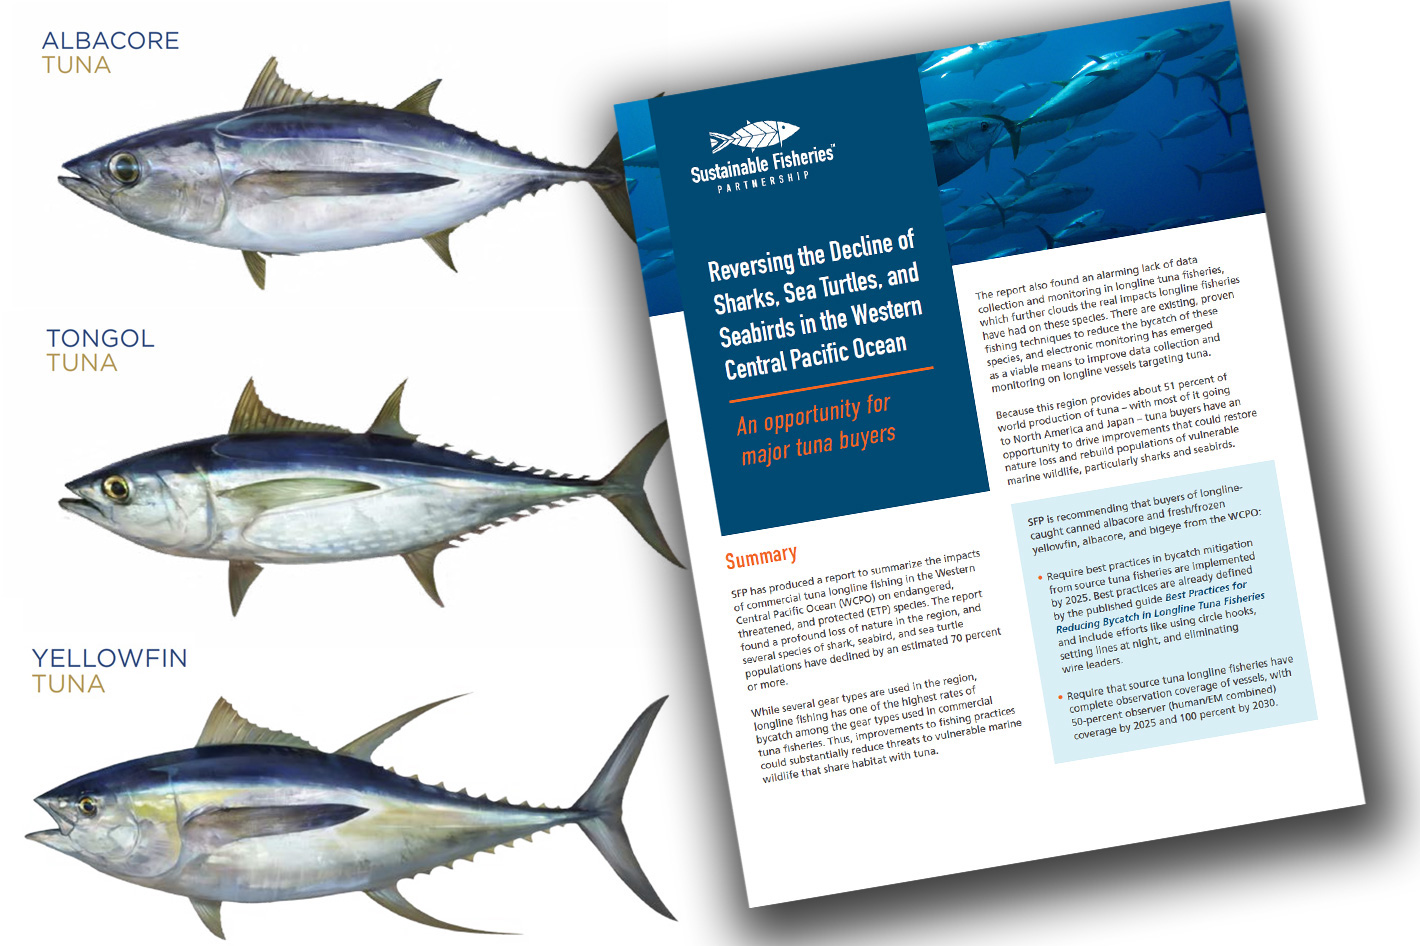 tuna longline, tuna longline Suppliers and Manufacturers at